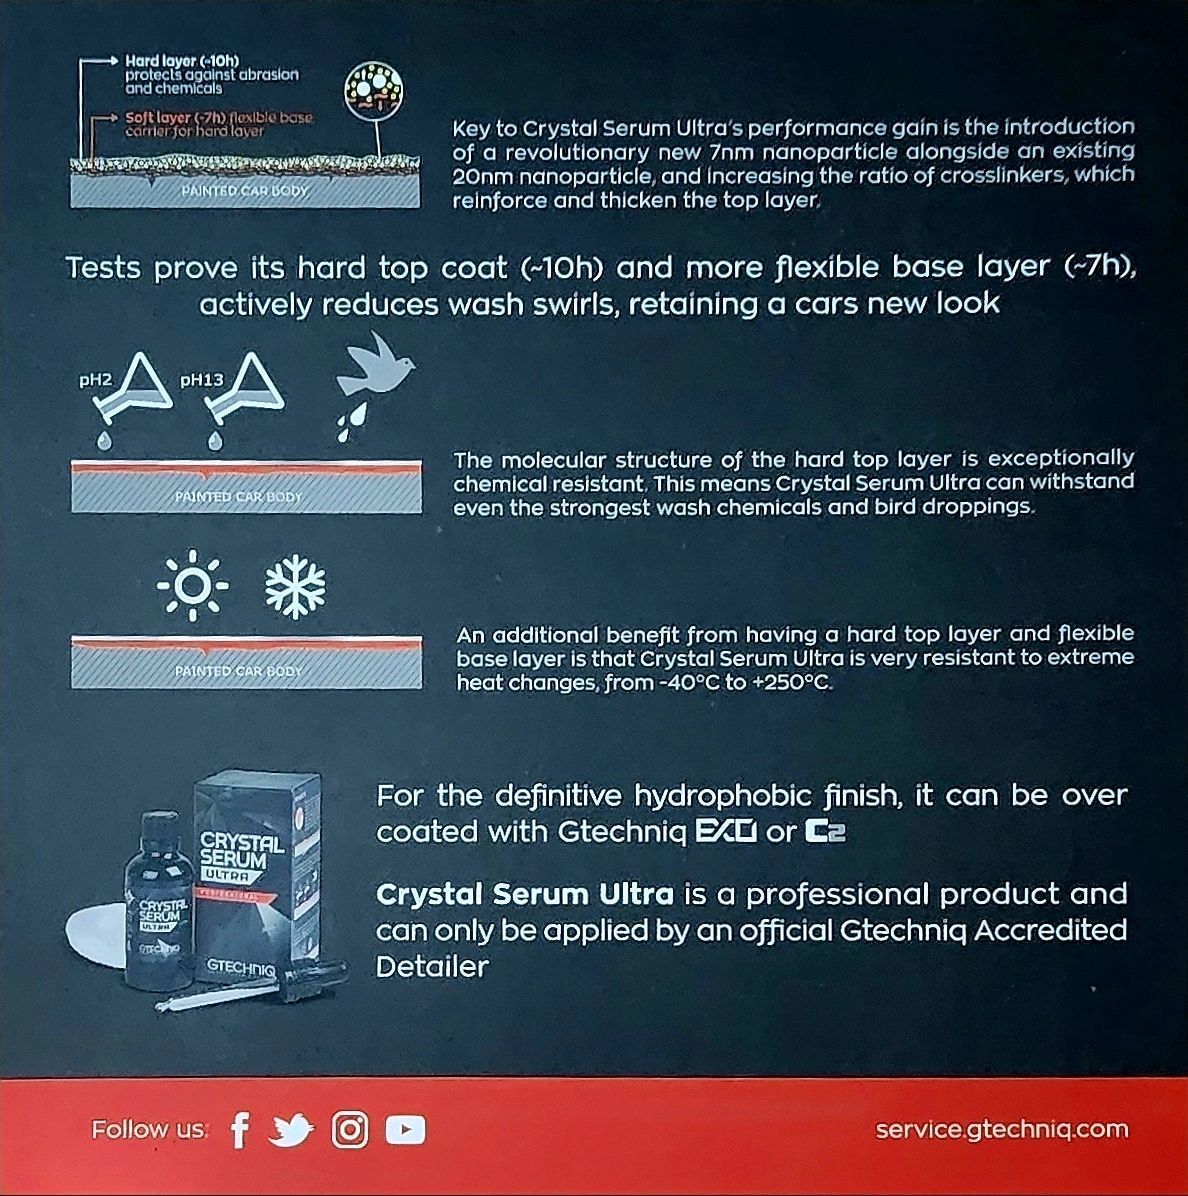 Advantage of Gtechniq Crystal Serum Ultra over Serum Light